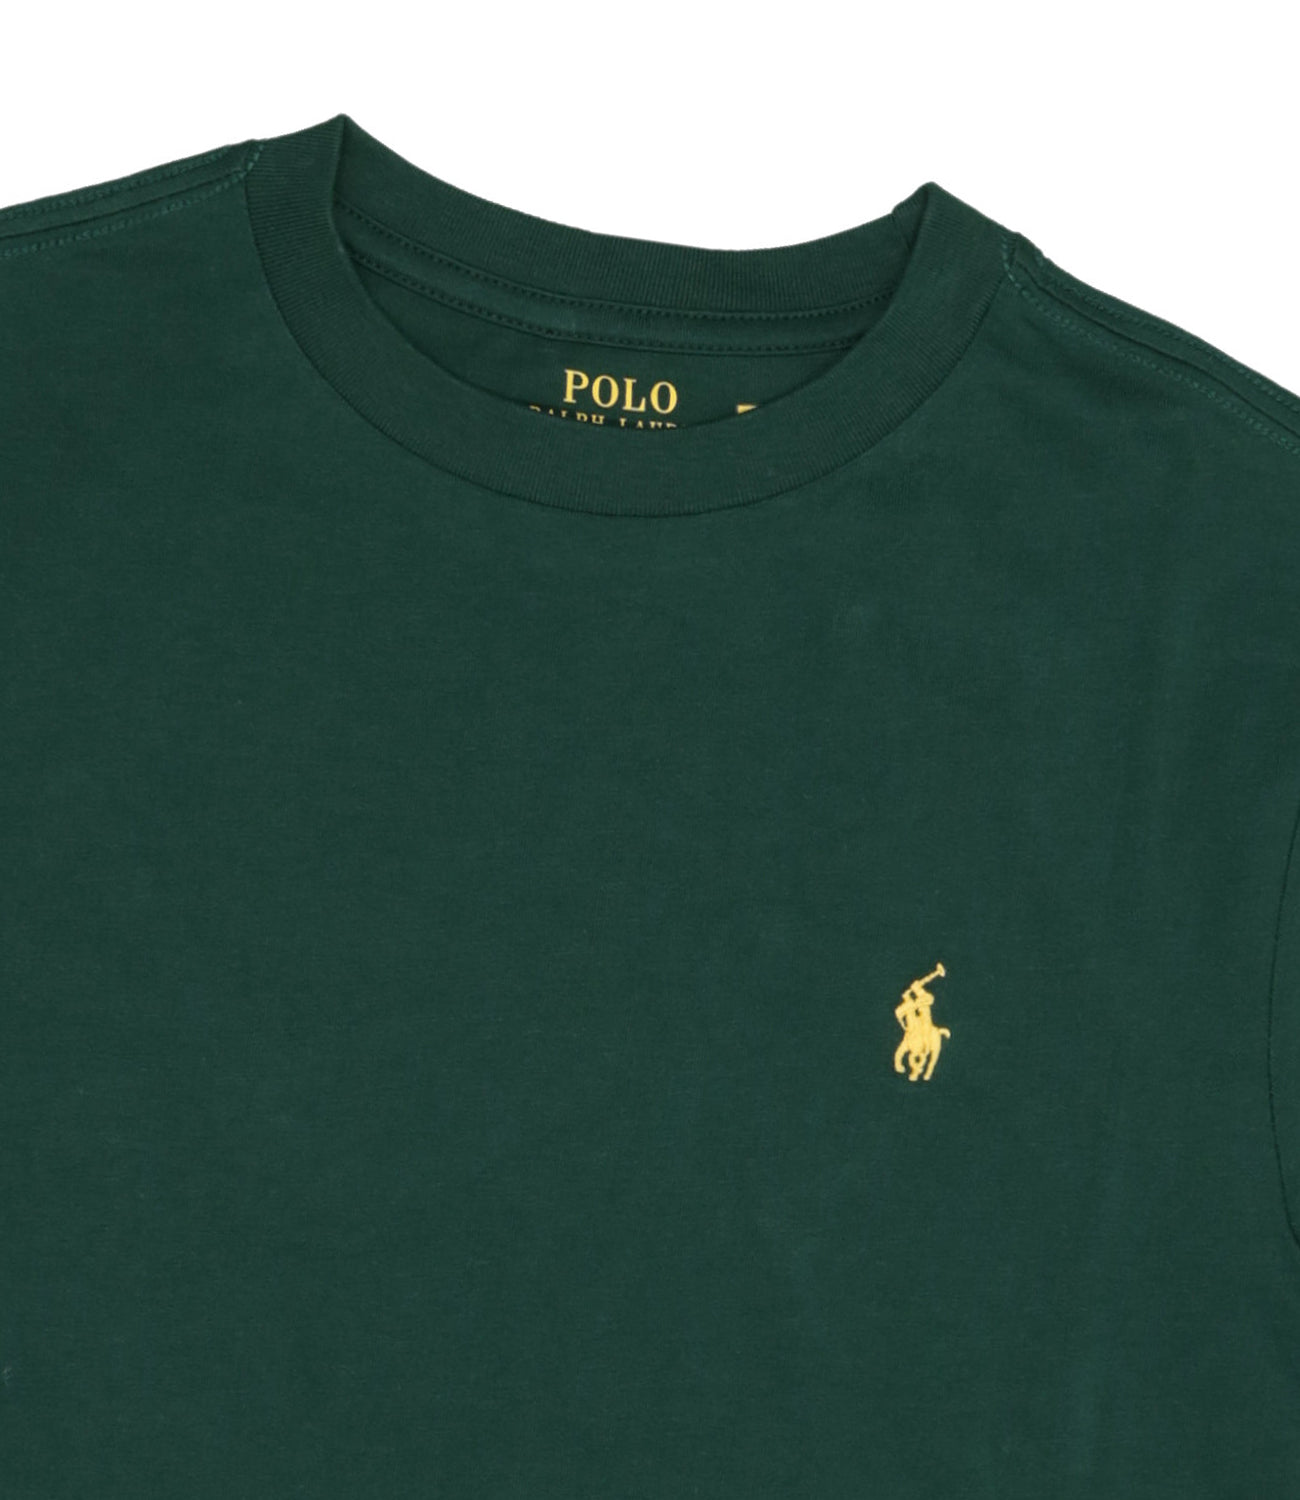 Ralph Lauren Childrenswear |T-Shirt Verde